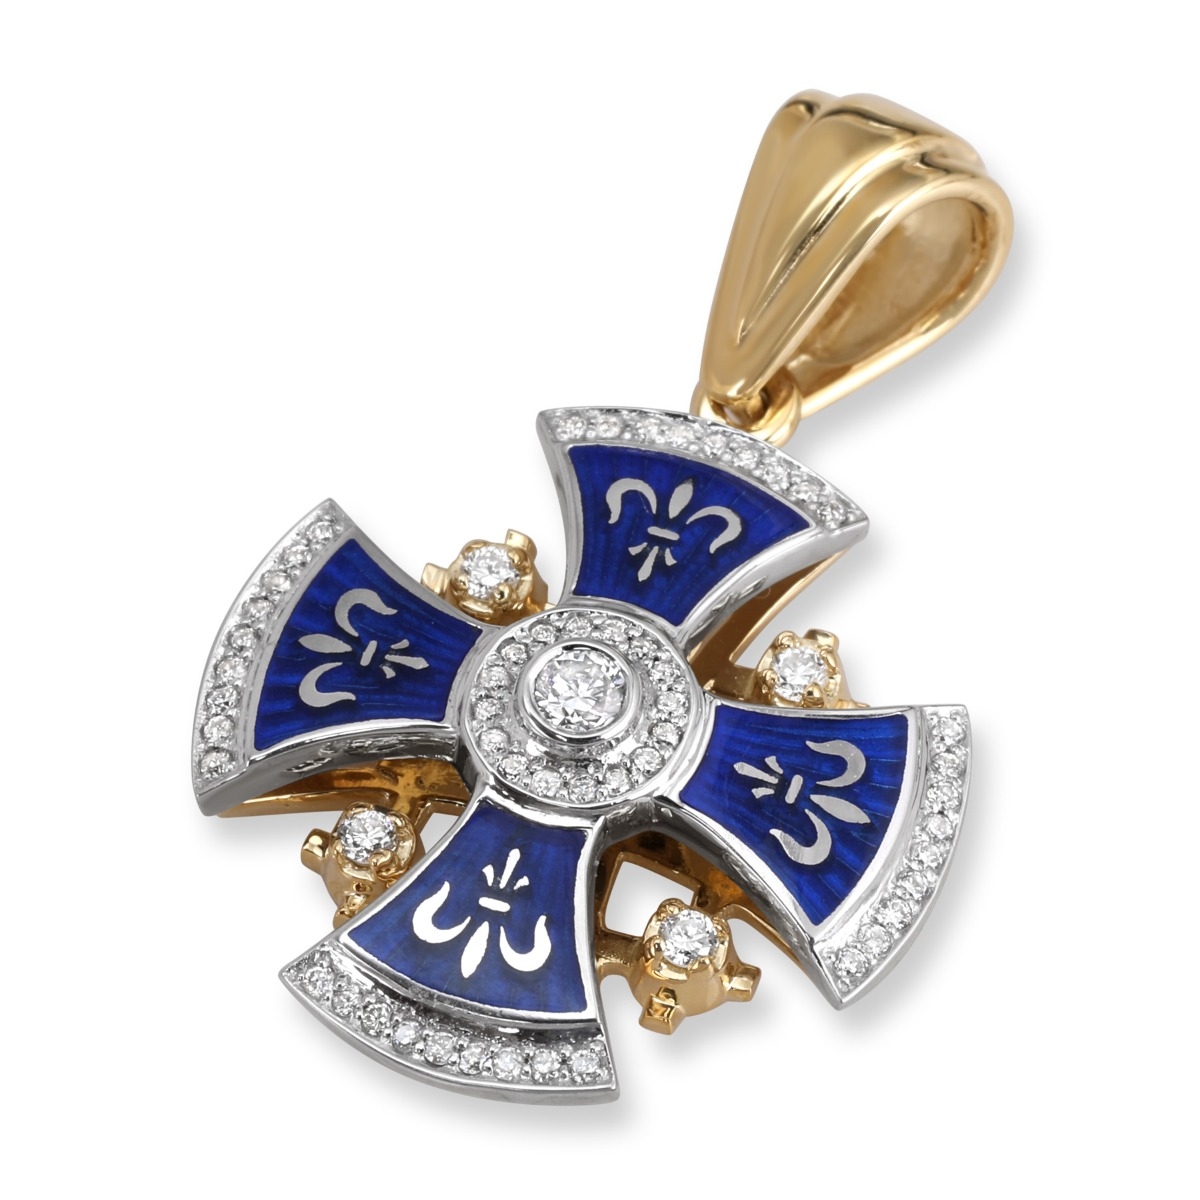 Anbinder Jewelry Medium Two Tone 14K White & Yellow Gold, Blue Enamel and Diamond Fleur De Lis Rounded Jerusalem Cross Pendant with 53 Diamonds - 1